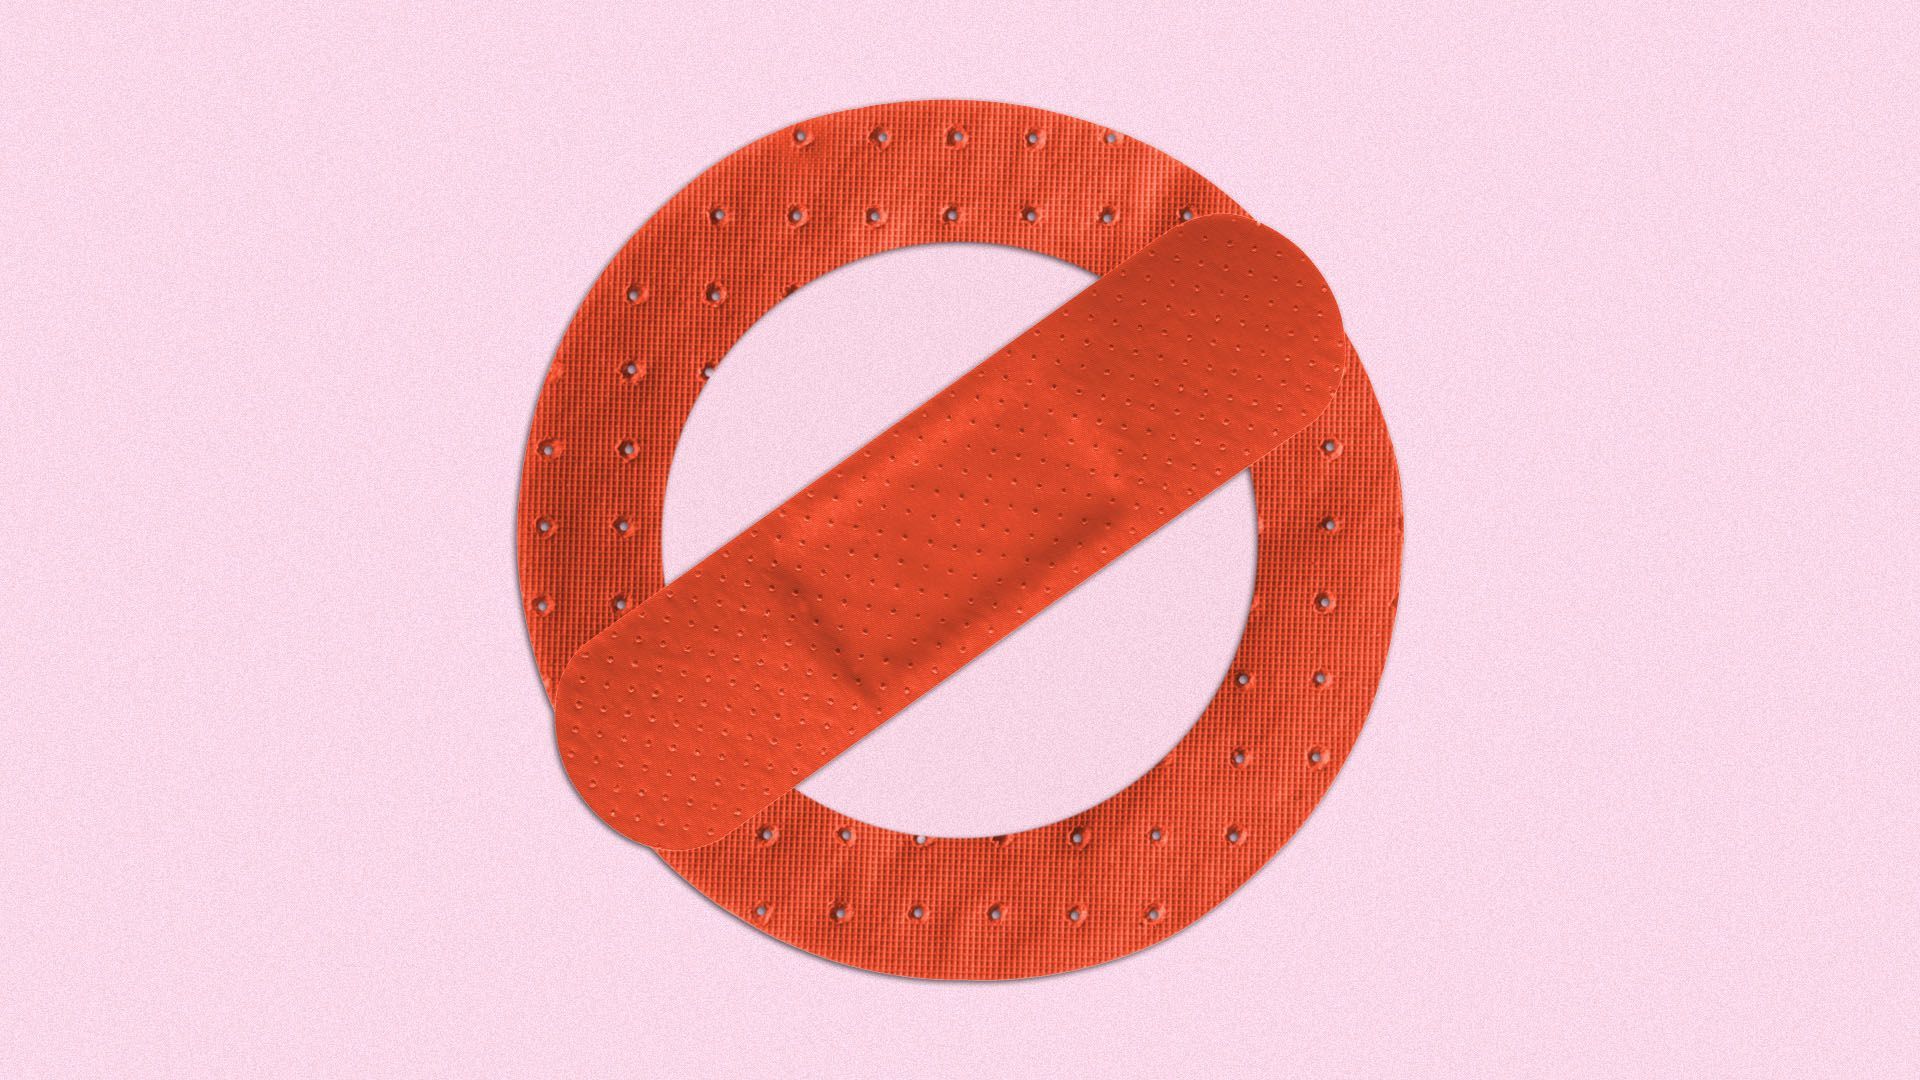 Illustration of a bandaid shaped like a "no" symbol